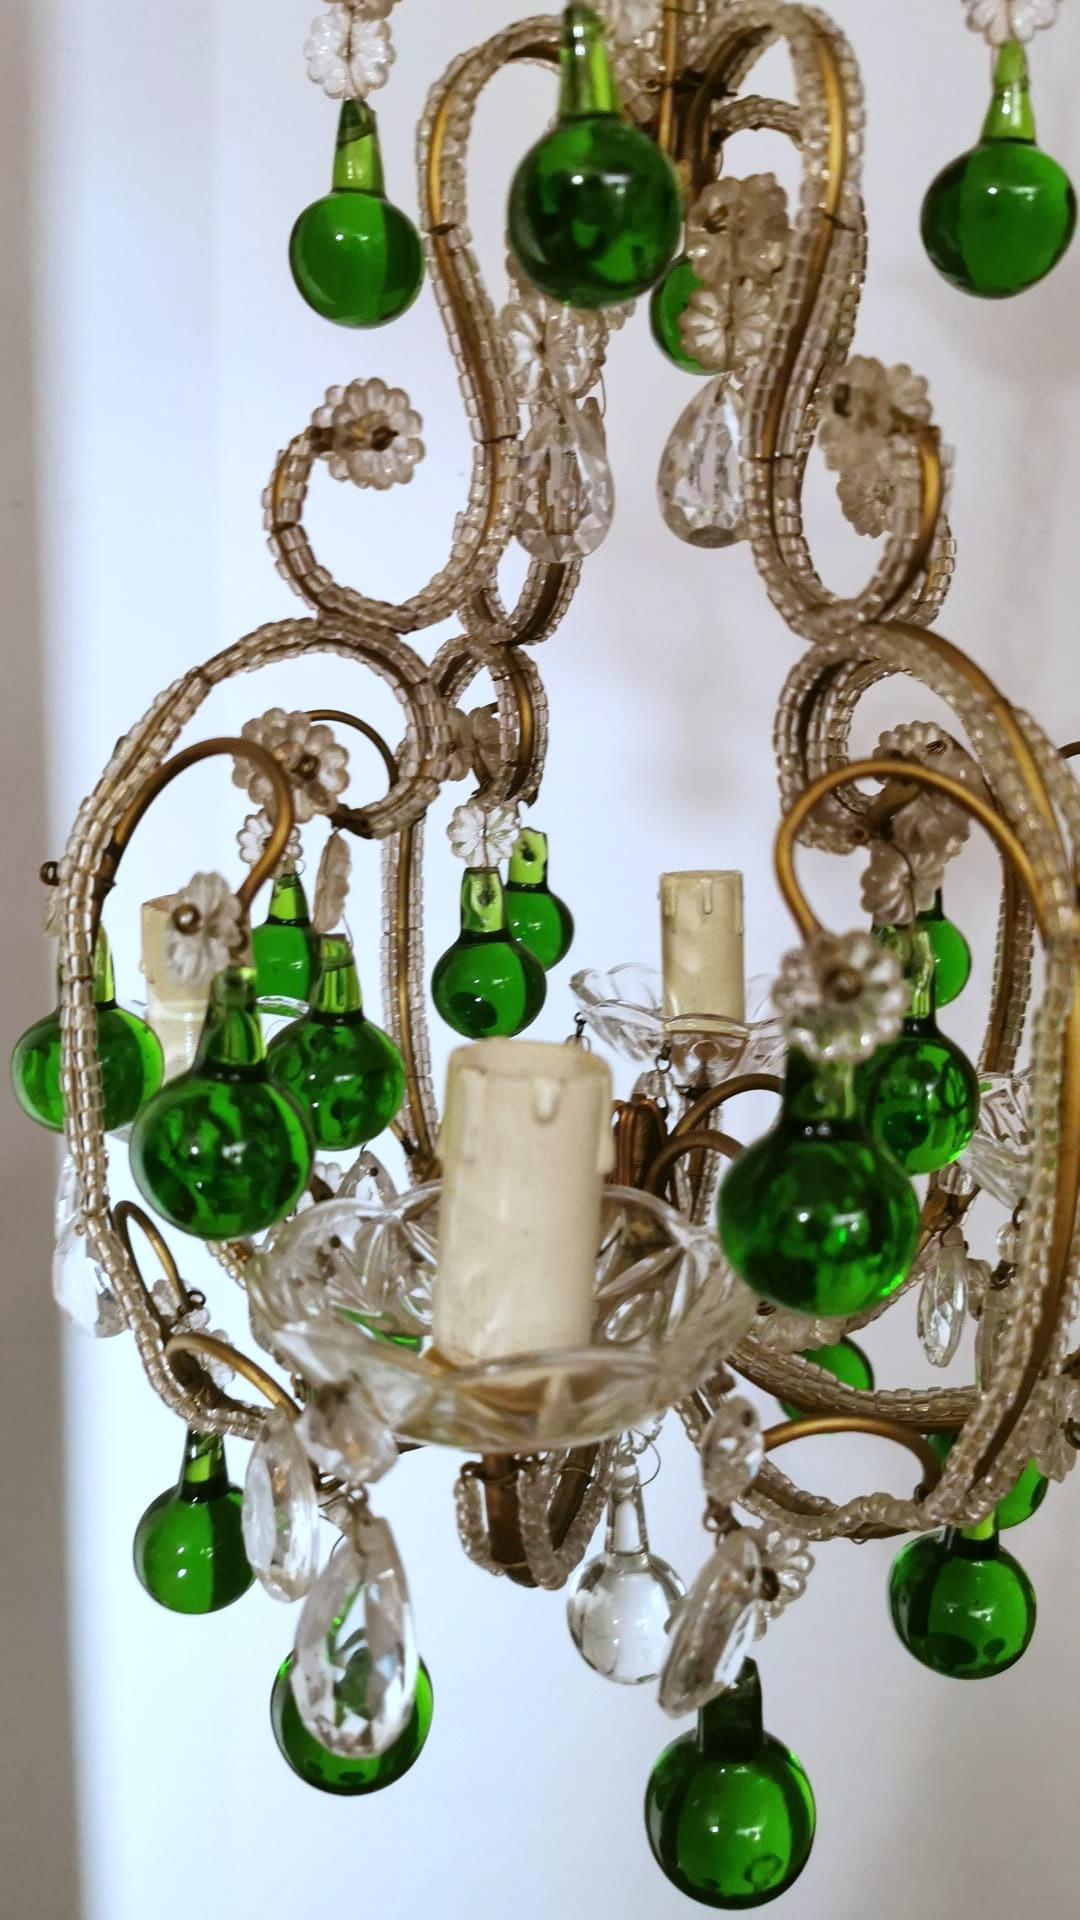 20th Century Florentine Craftsmanship Italian Brass Chandelier with Crystals and Green Glasse